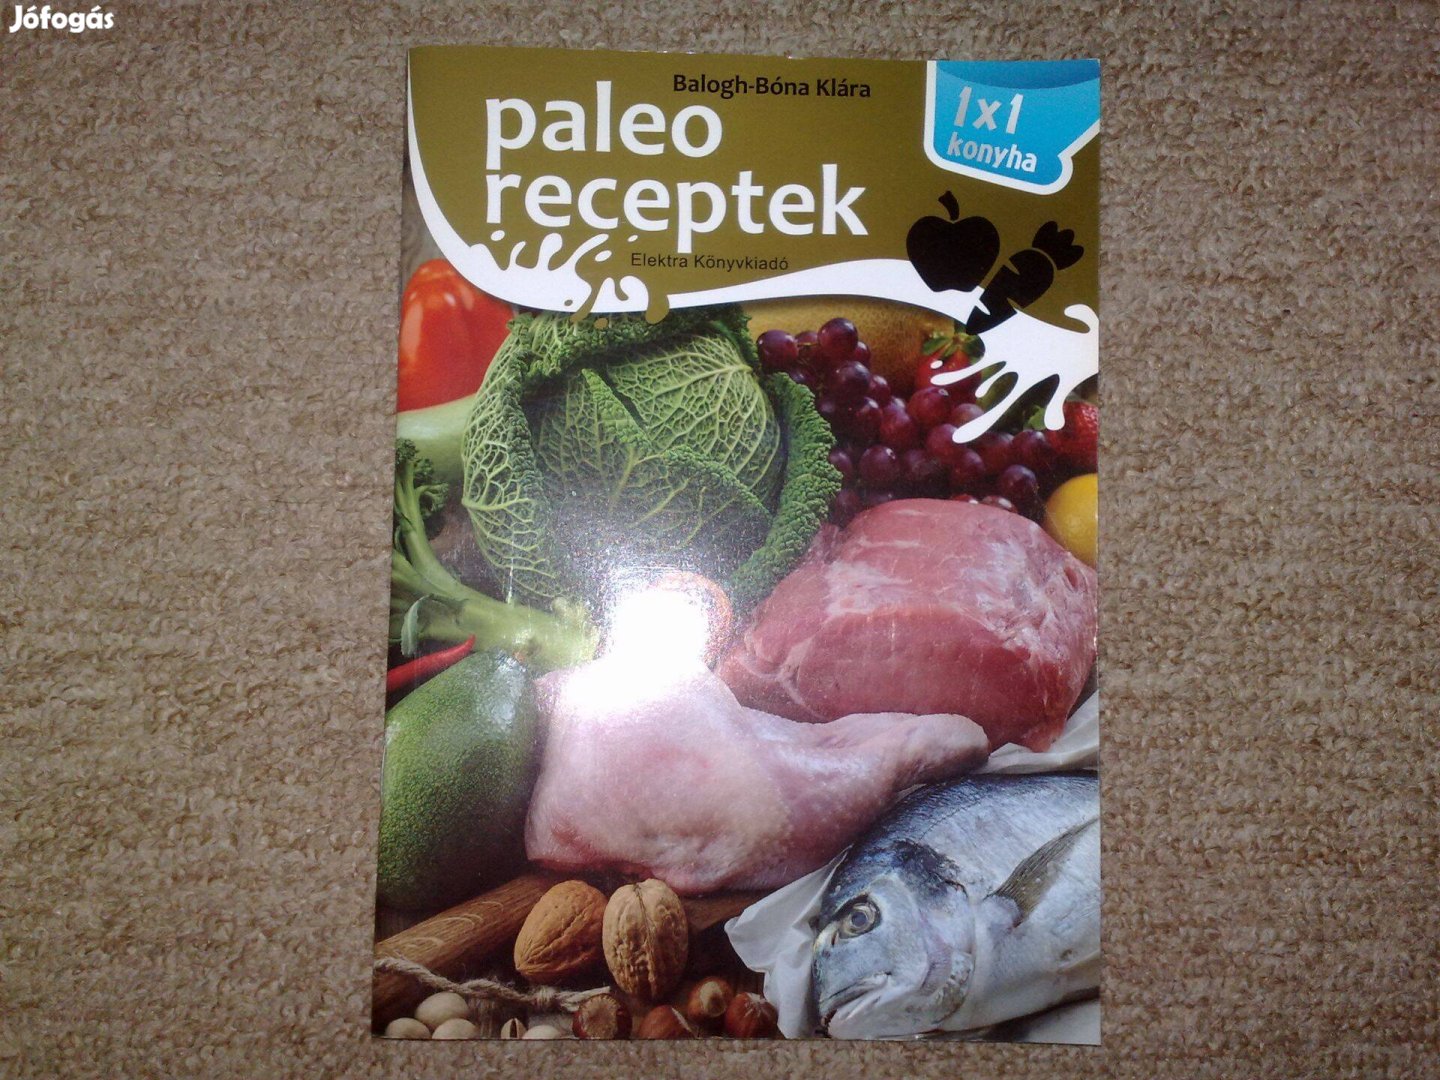 Paleo receptek (dr. Balogh-Bóna Klára)